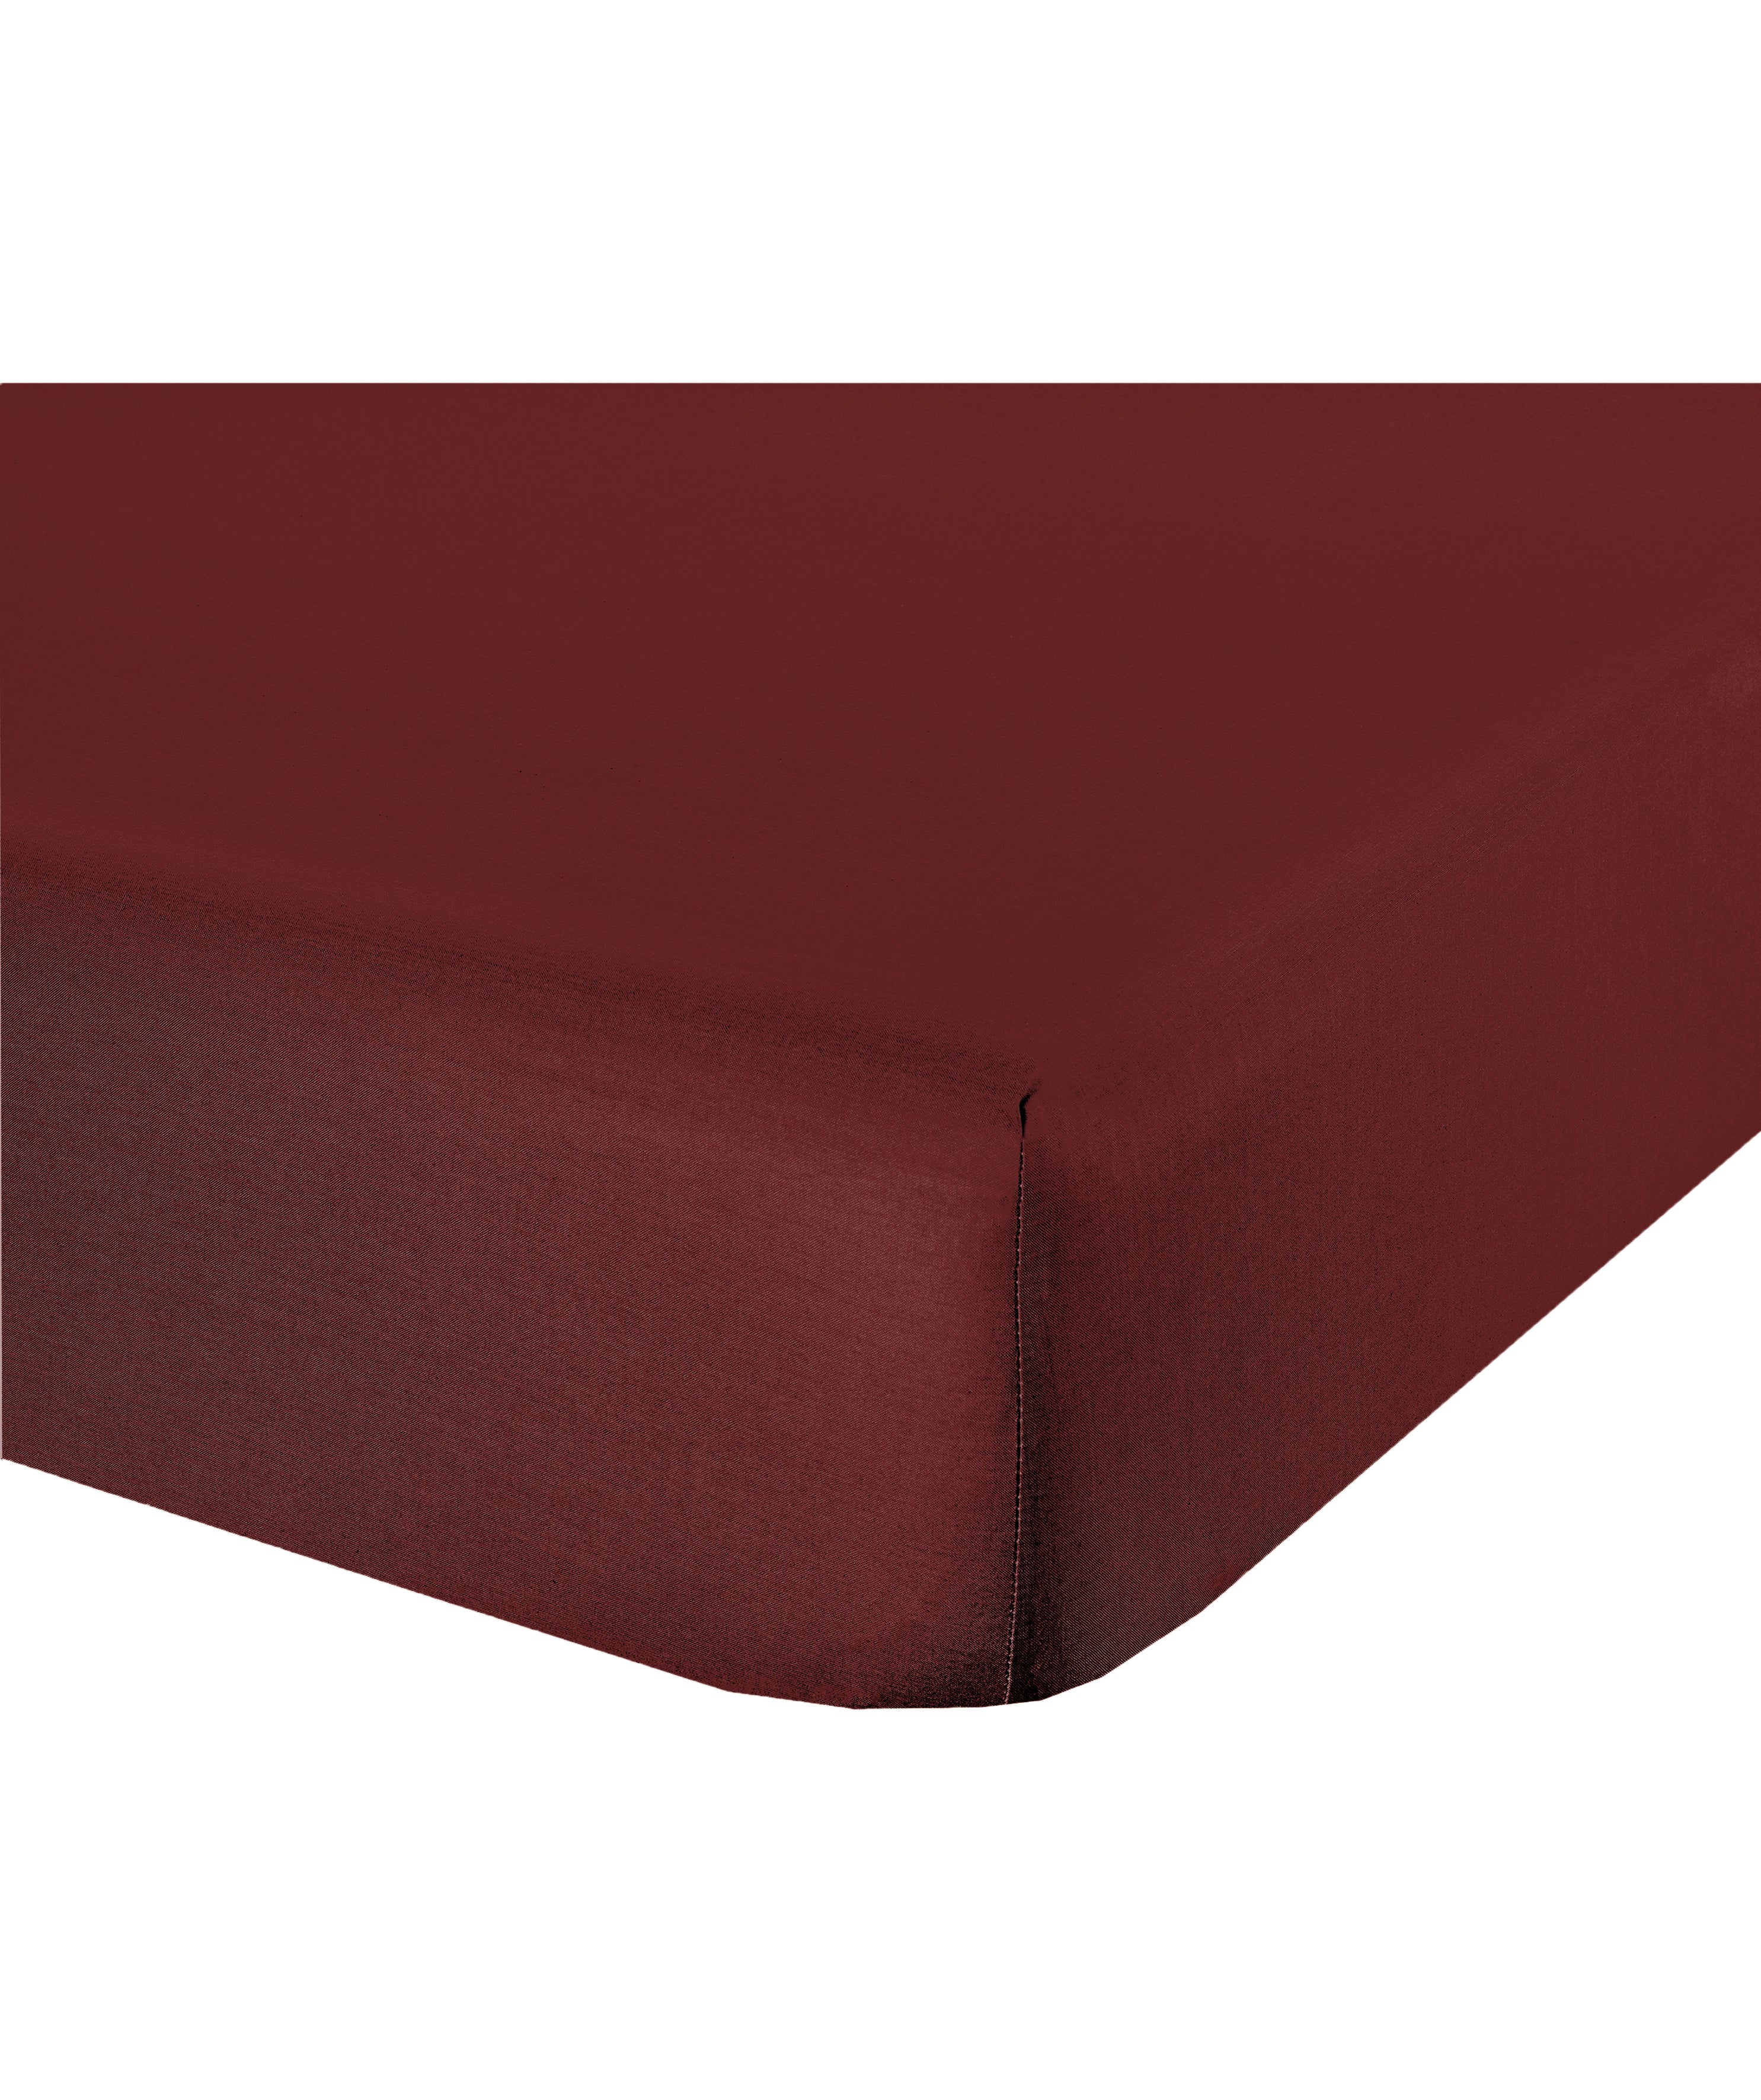 Lenzuolo letto sotto lenzuola con angoli flanella caldo cotone 100% cotone Made in Italy BORDEAUX